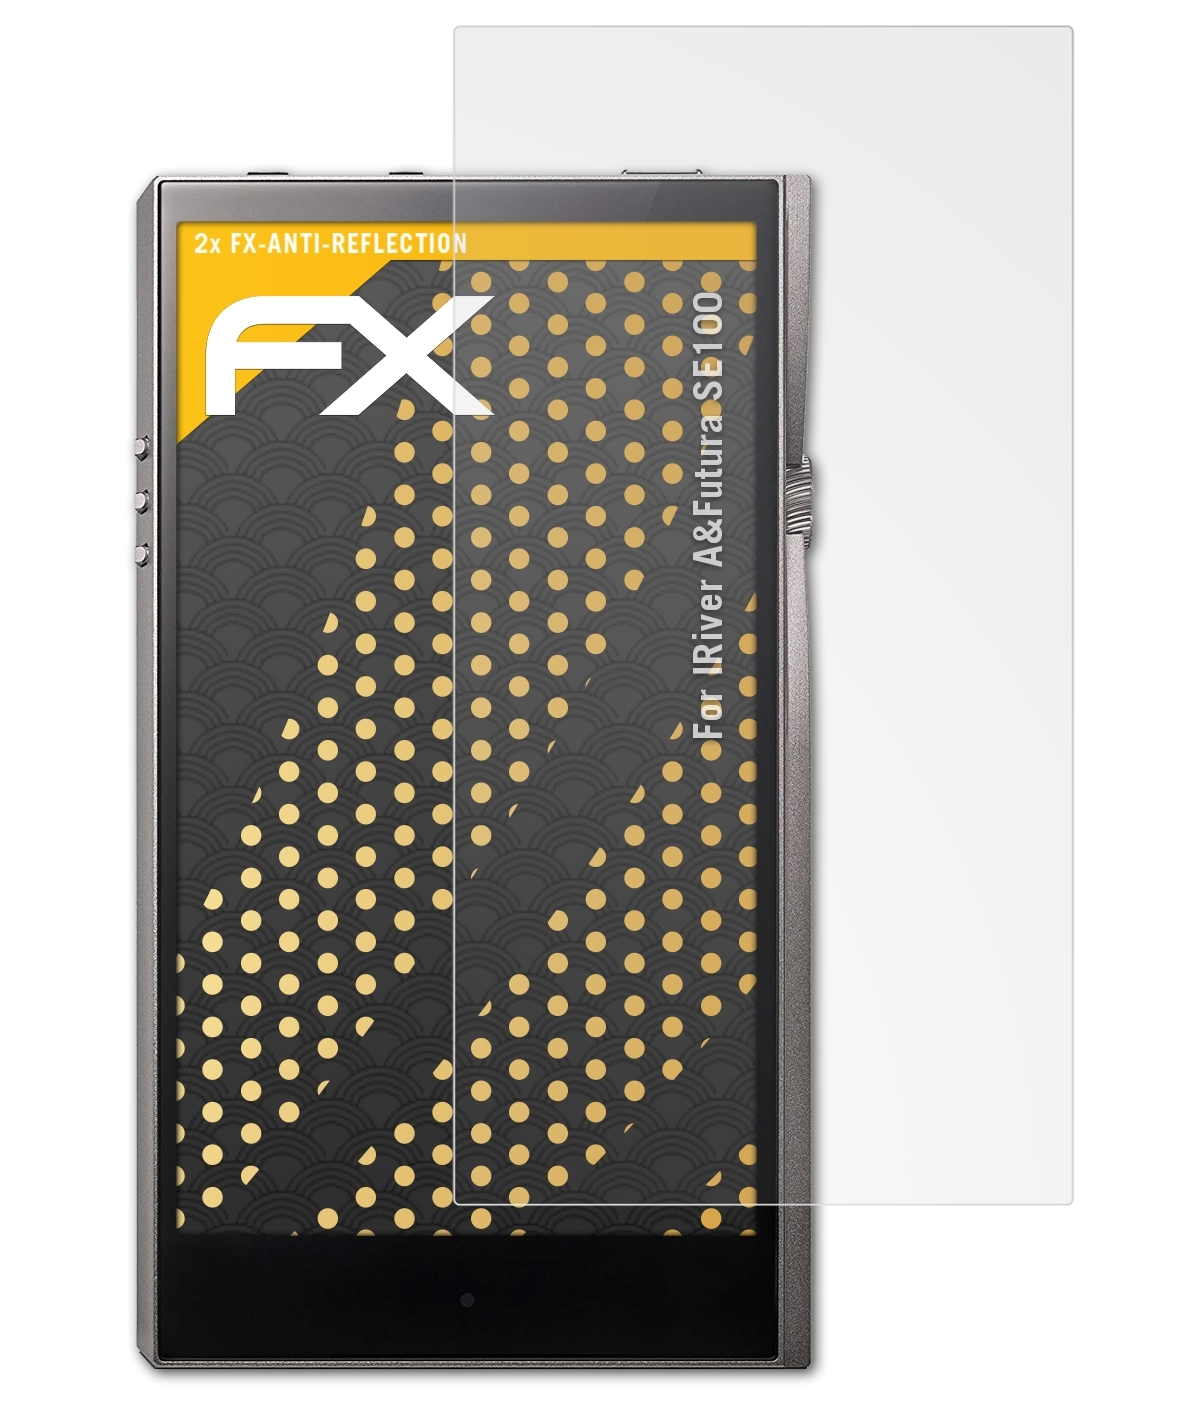 ATFOLIX 2x FX-Antireflex A&Futura Displayschutz(für SE100) IRiver